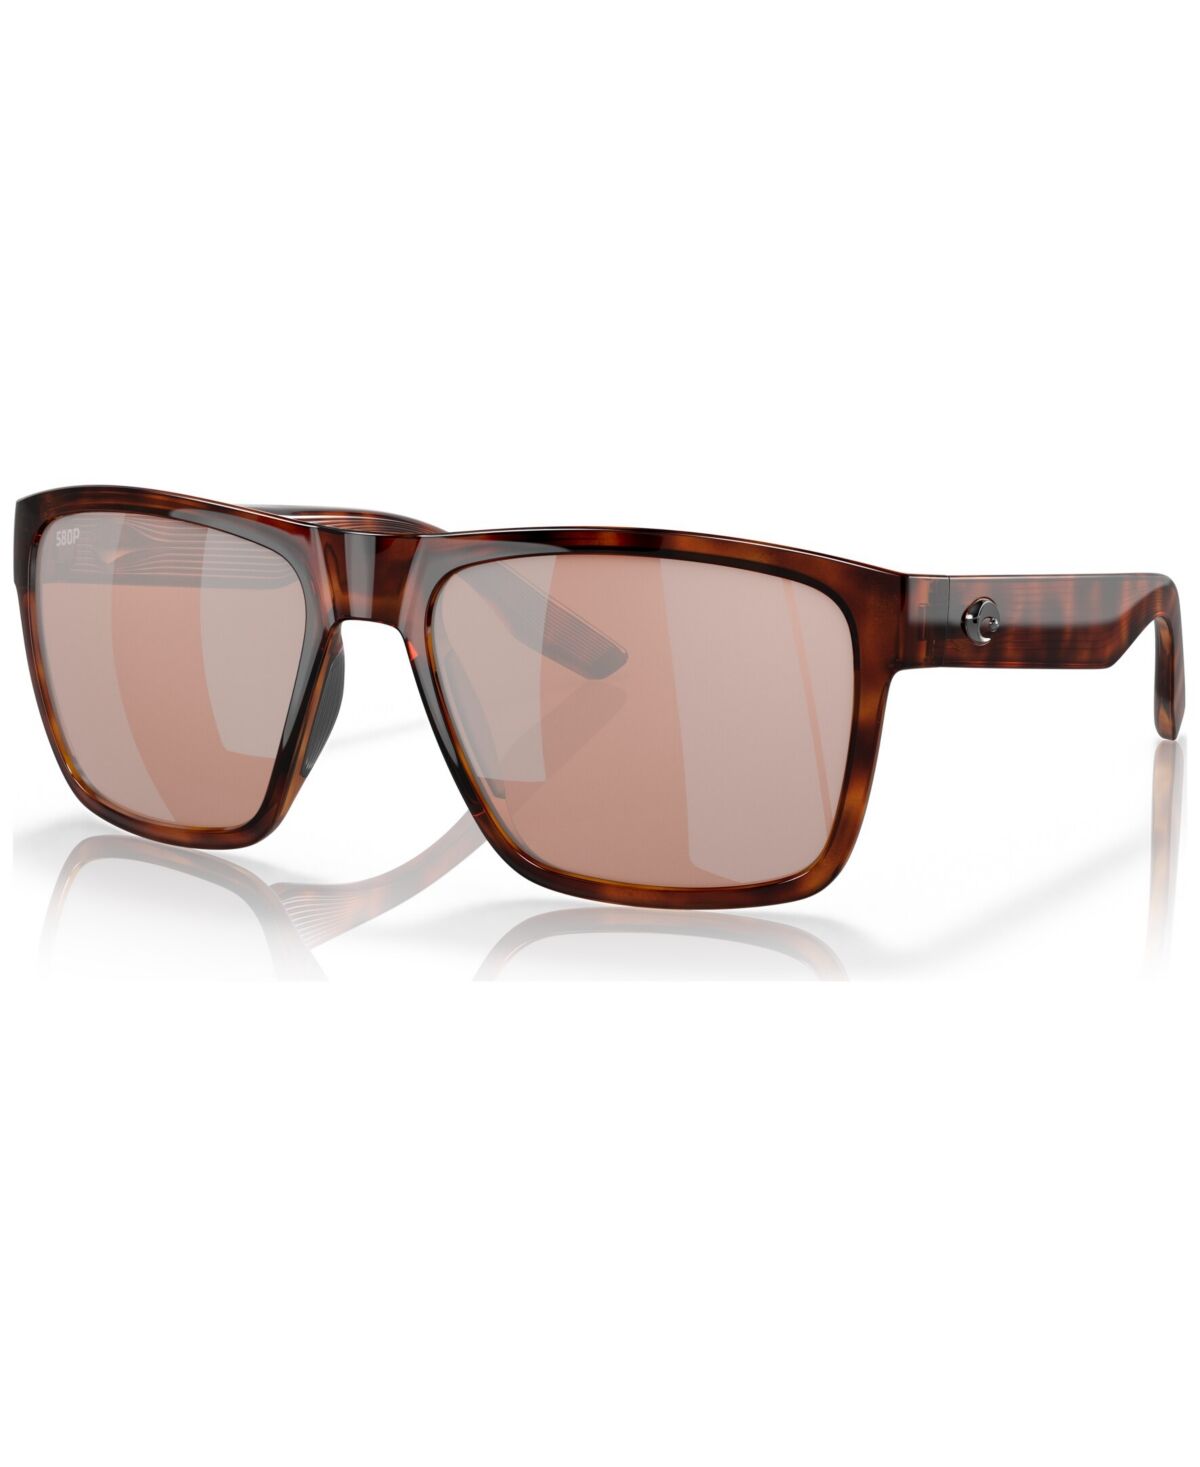 Costa Del Mar Men's Polarized Sunglasses, 6S905059-zp - Tortoise